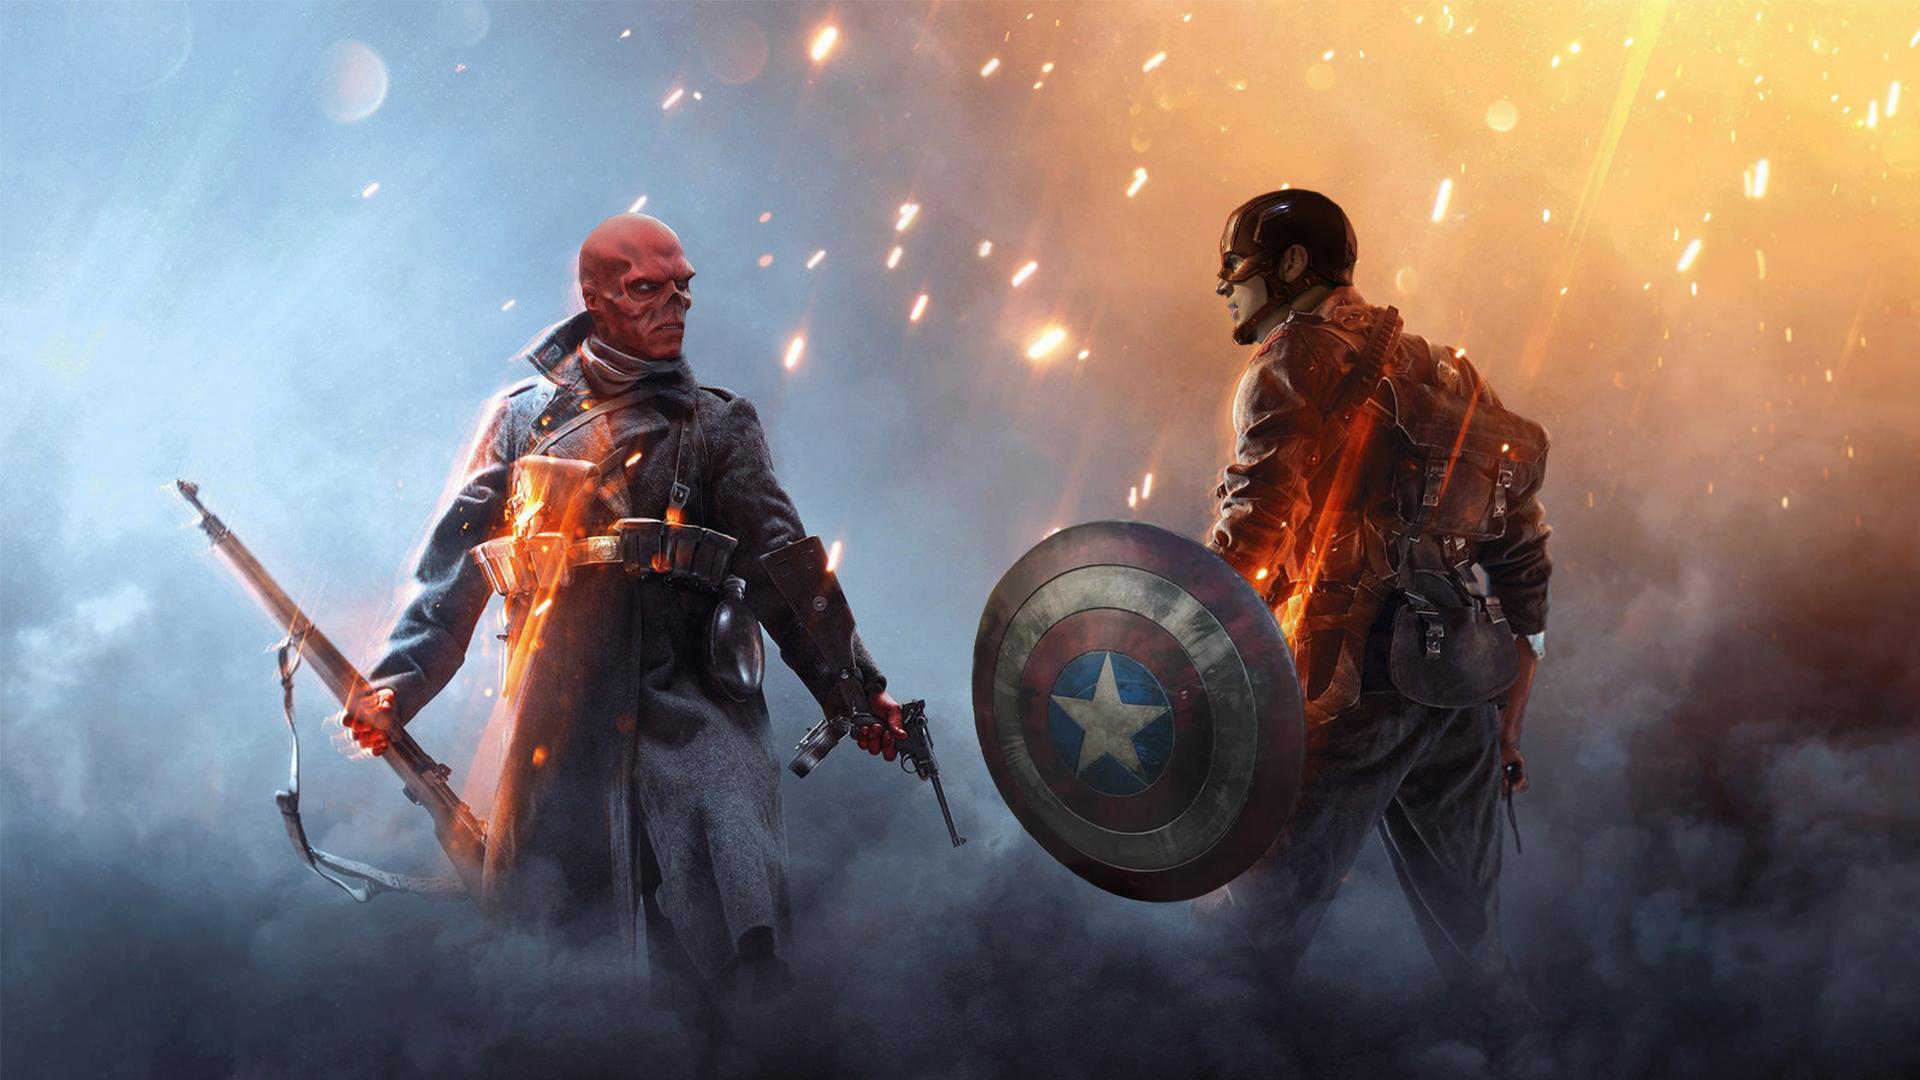 Did Captain America Encounter Red Skull in Endgame? Hashtag